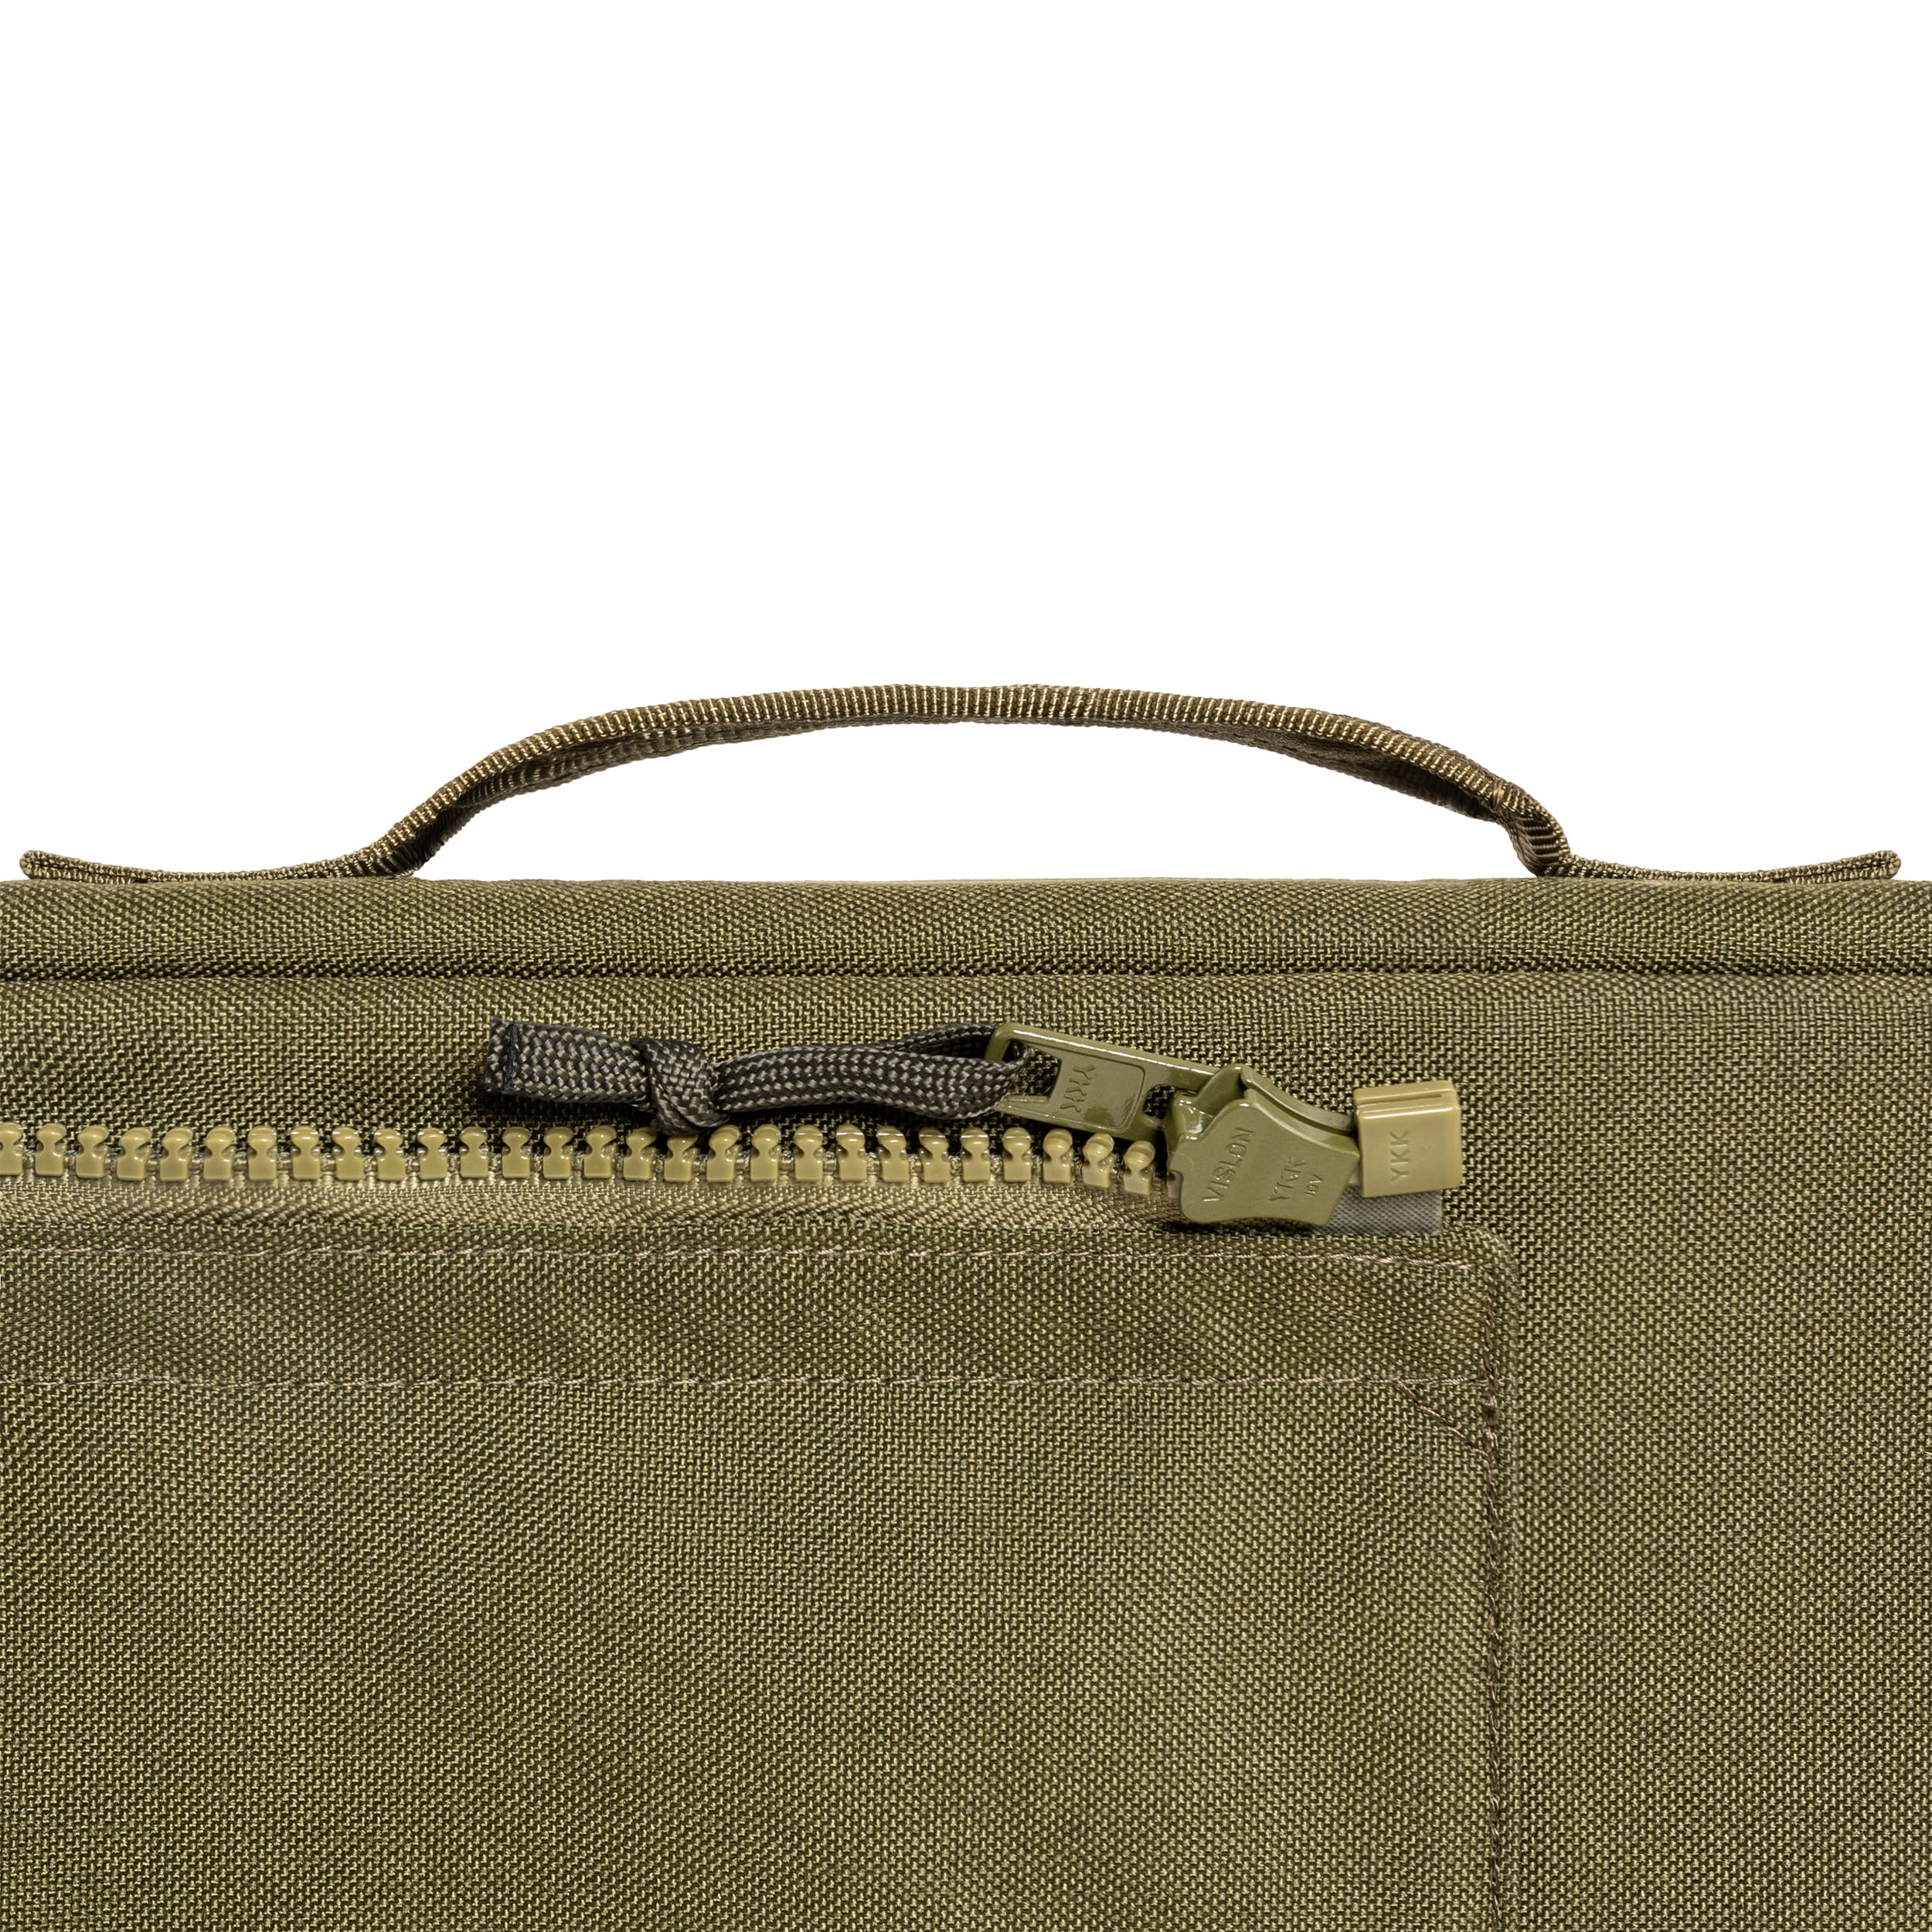 Pokrowiec na broń Berghaus Tactical FMPS Weapon Bag S II - Cedar